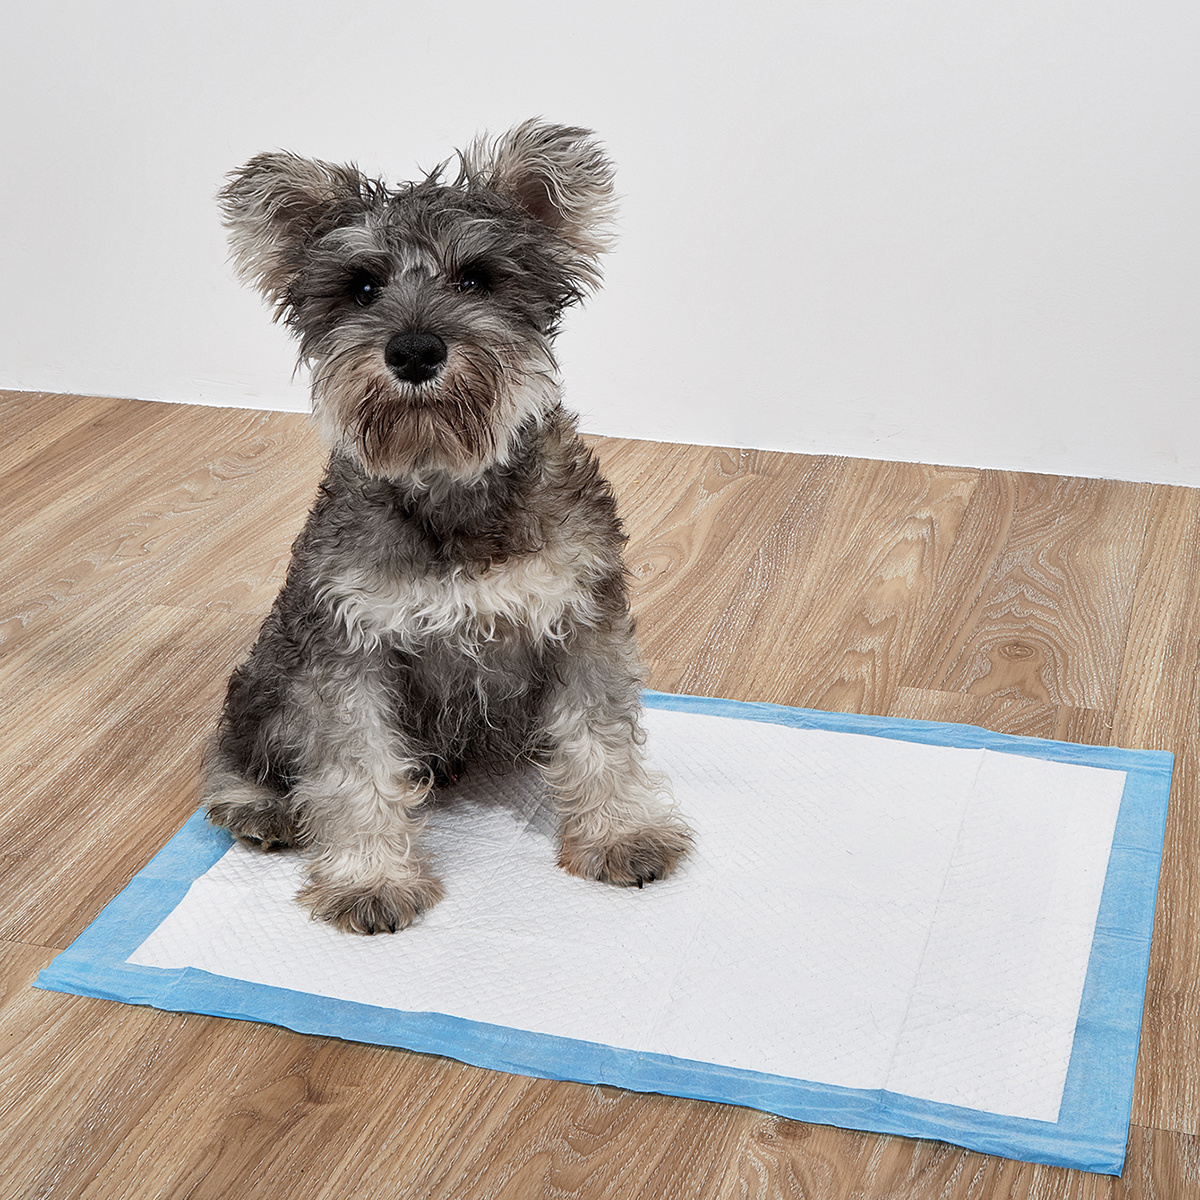 Super Absorbent Dog Pee Pads For Potty Training - Leak-proof Pet